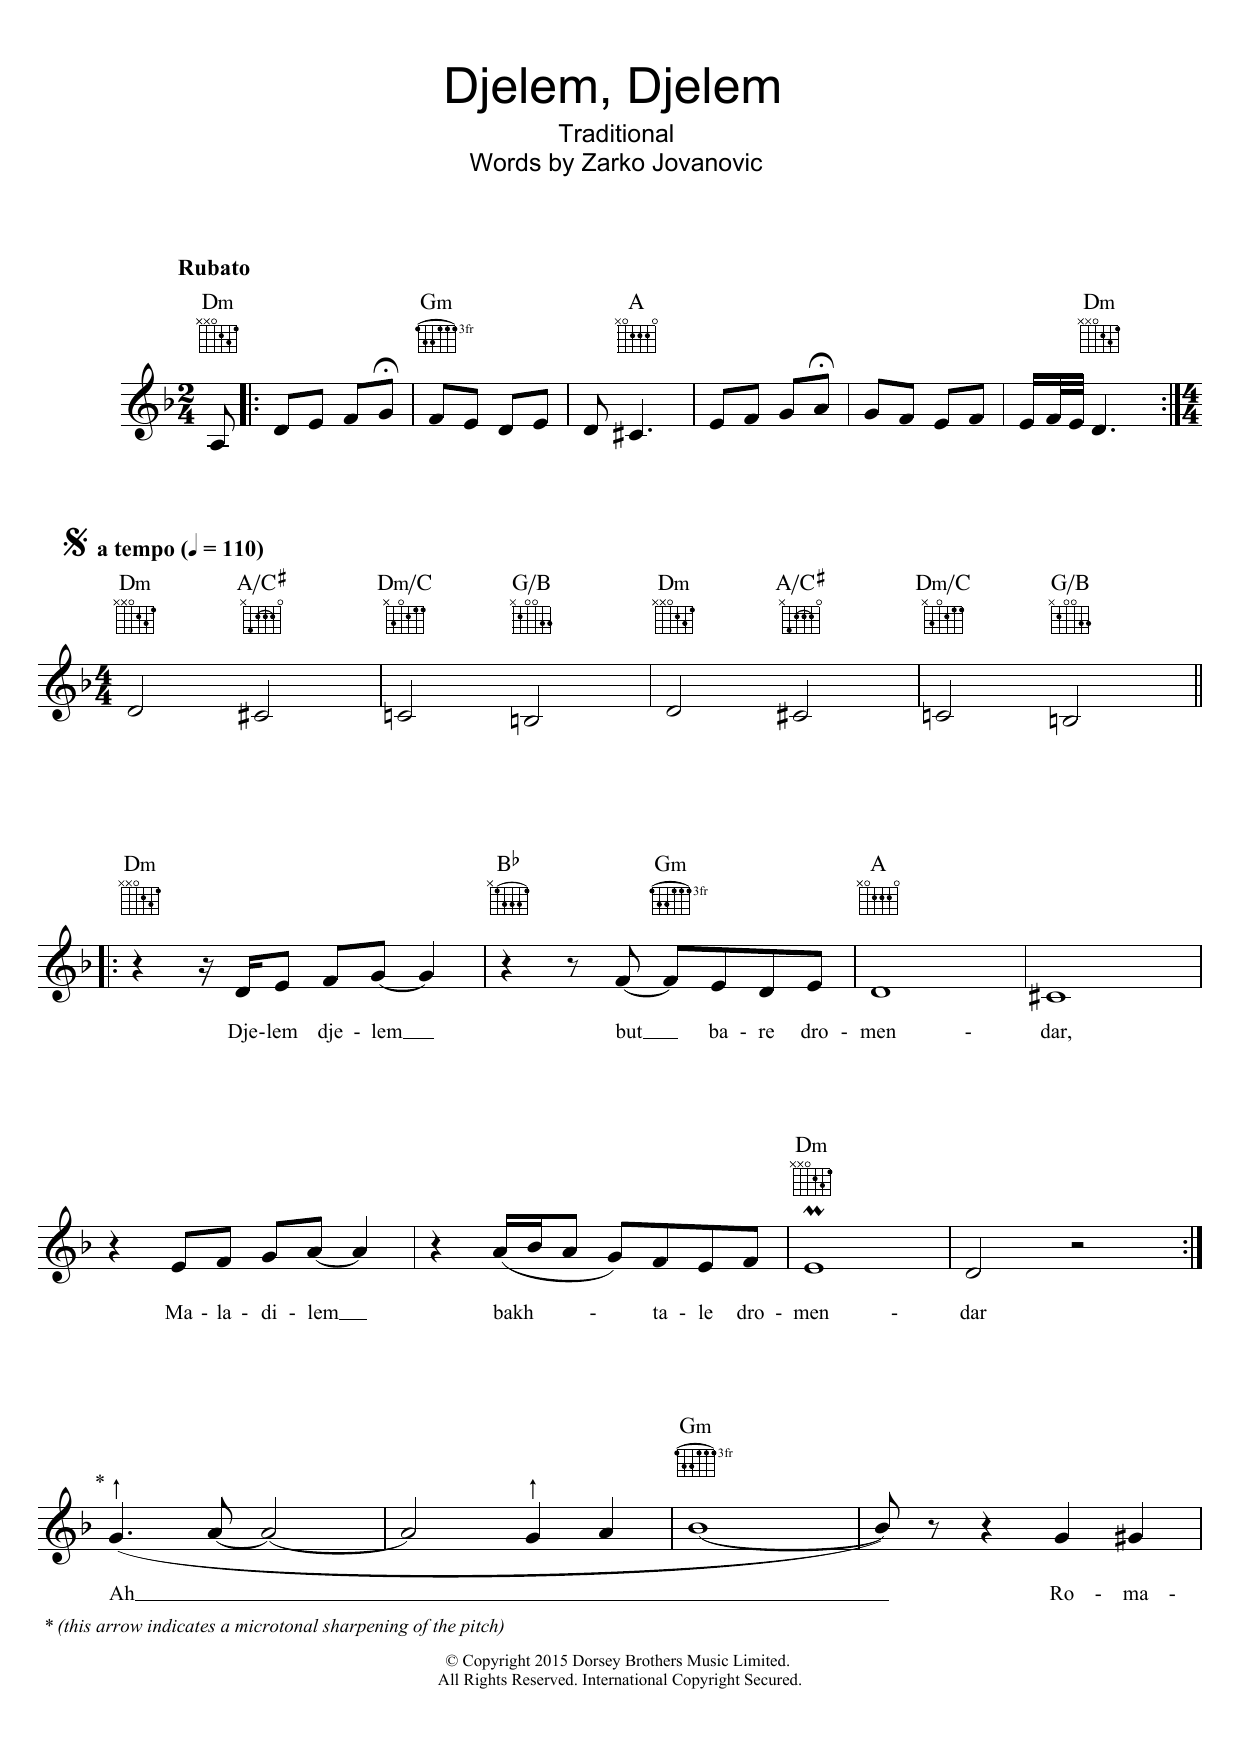 Saban Bajramovic Djelem, Djelem Sheet Music Notes & Chords for Melody Line, Lyrics & Chords - Download or Print PDF